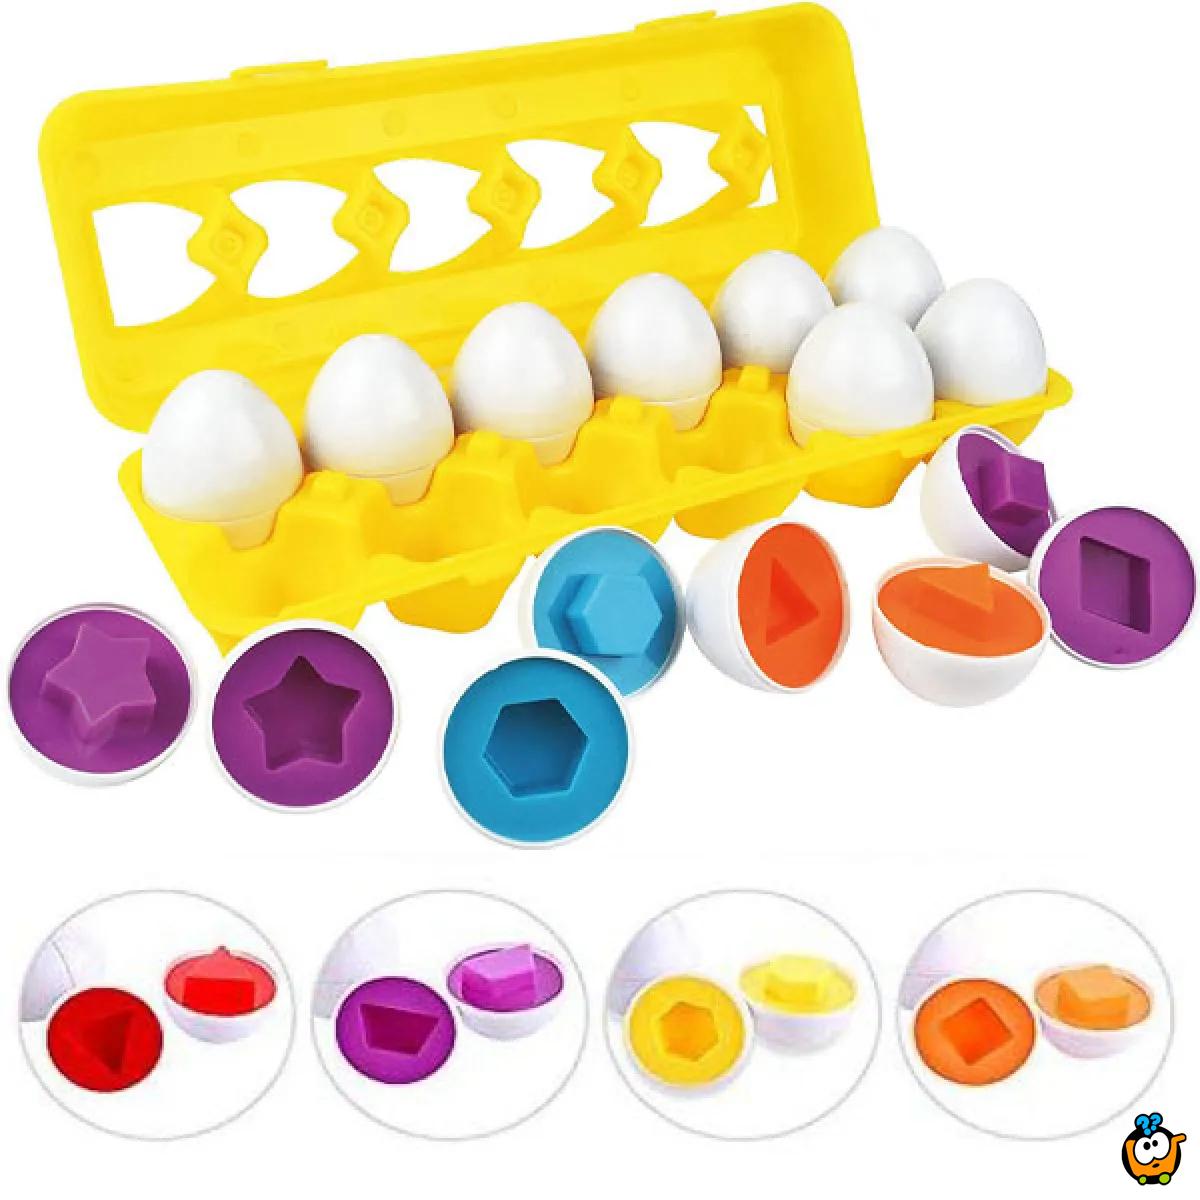 Edukativna jaja različitih oblika i boja